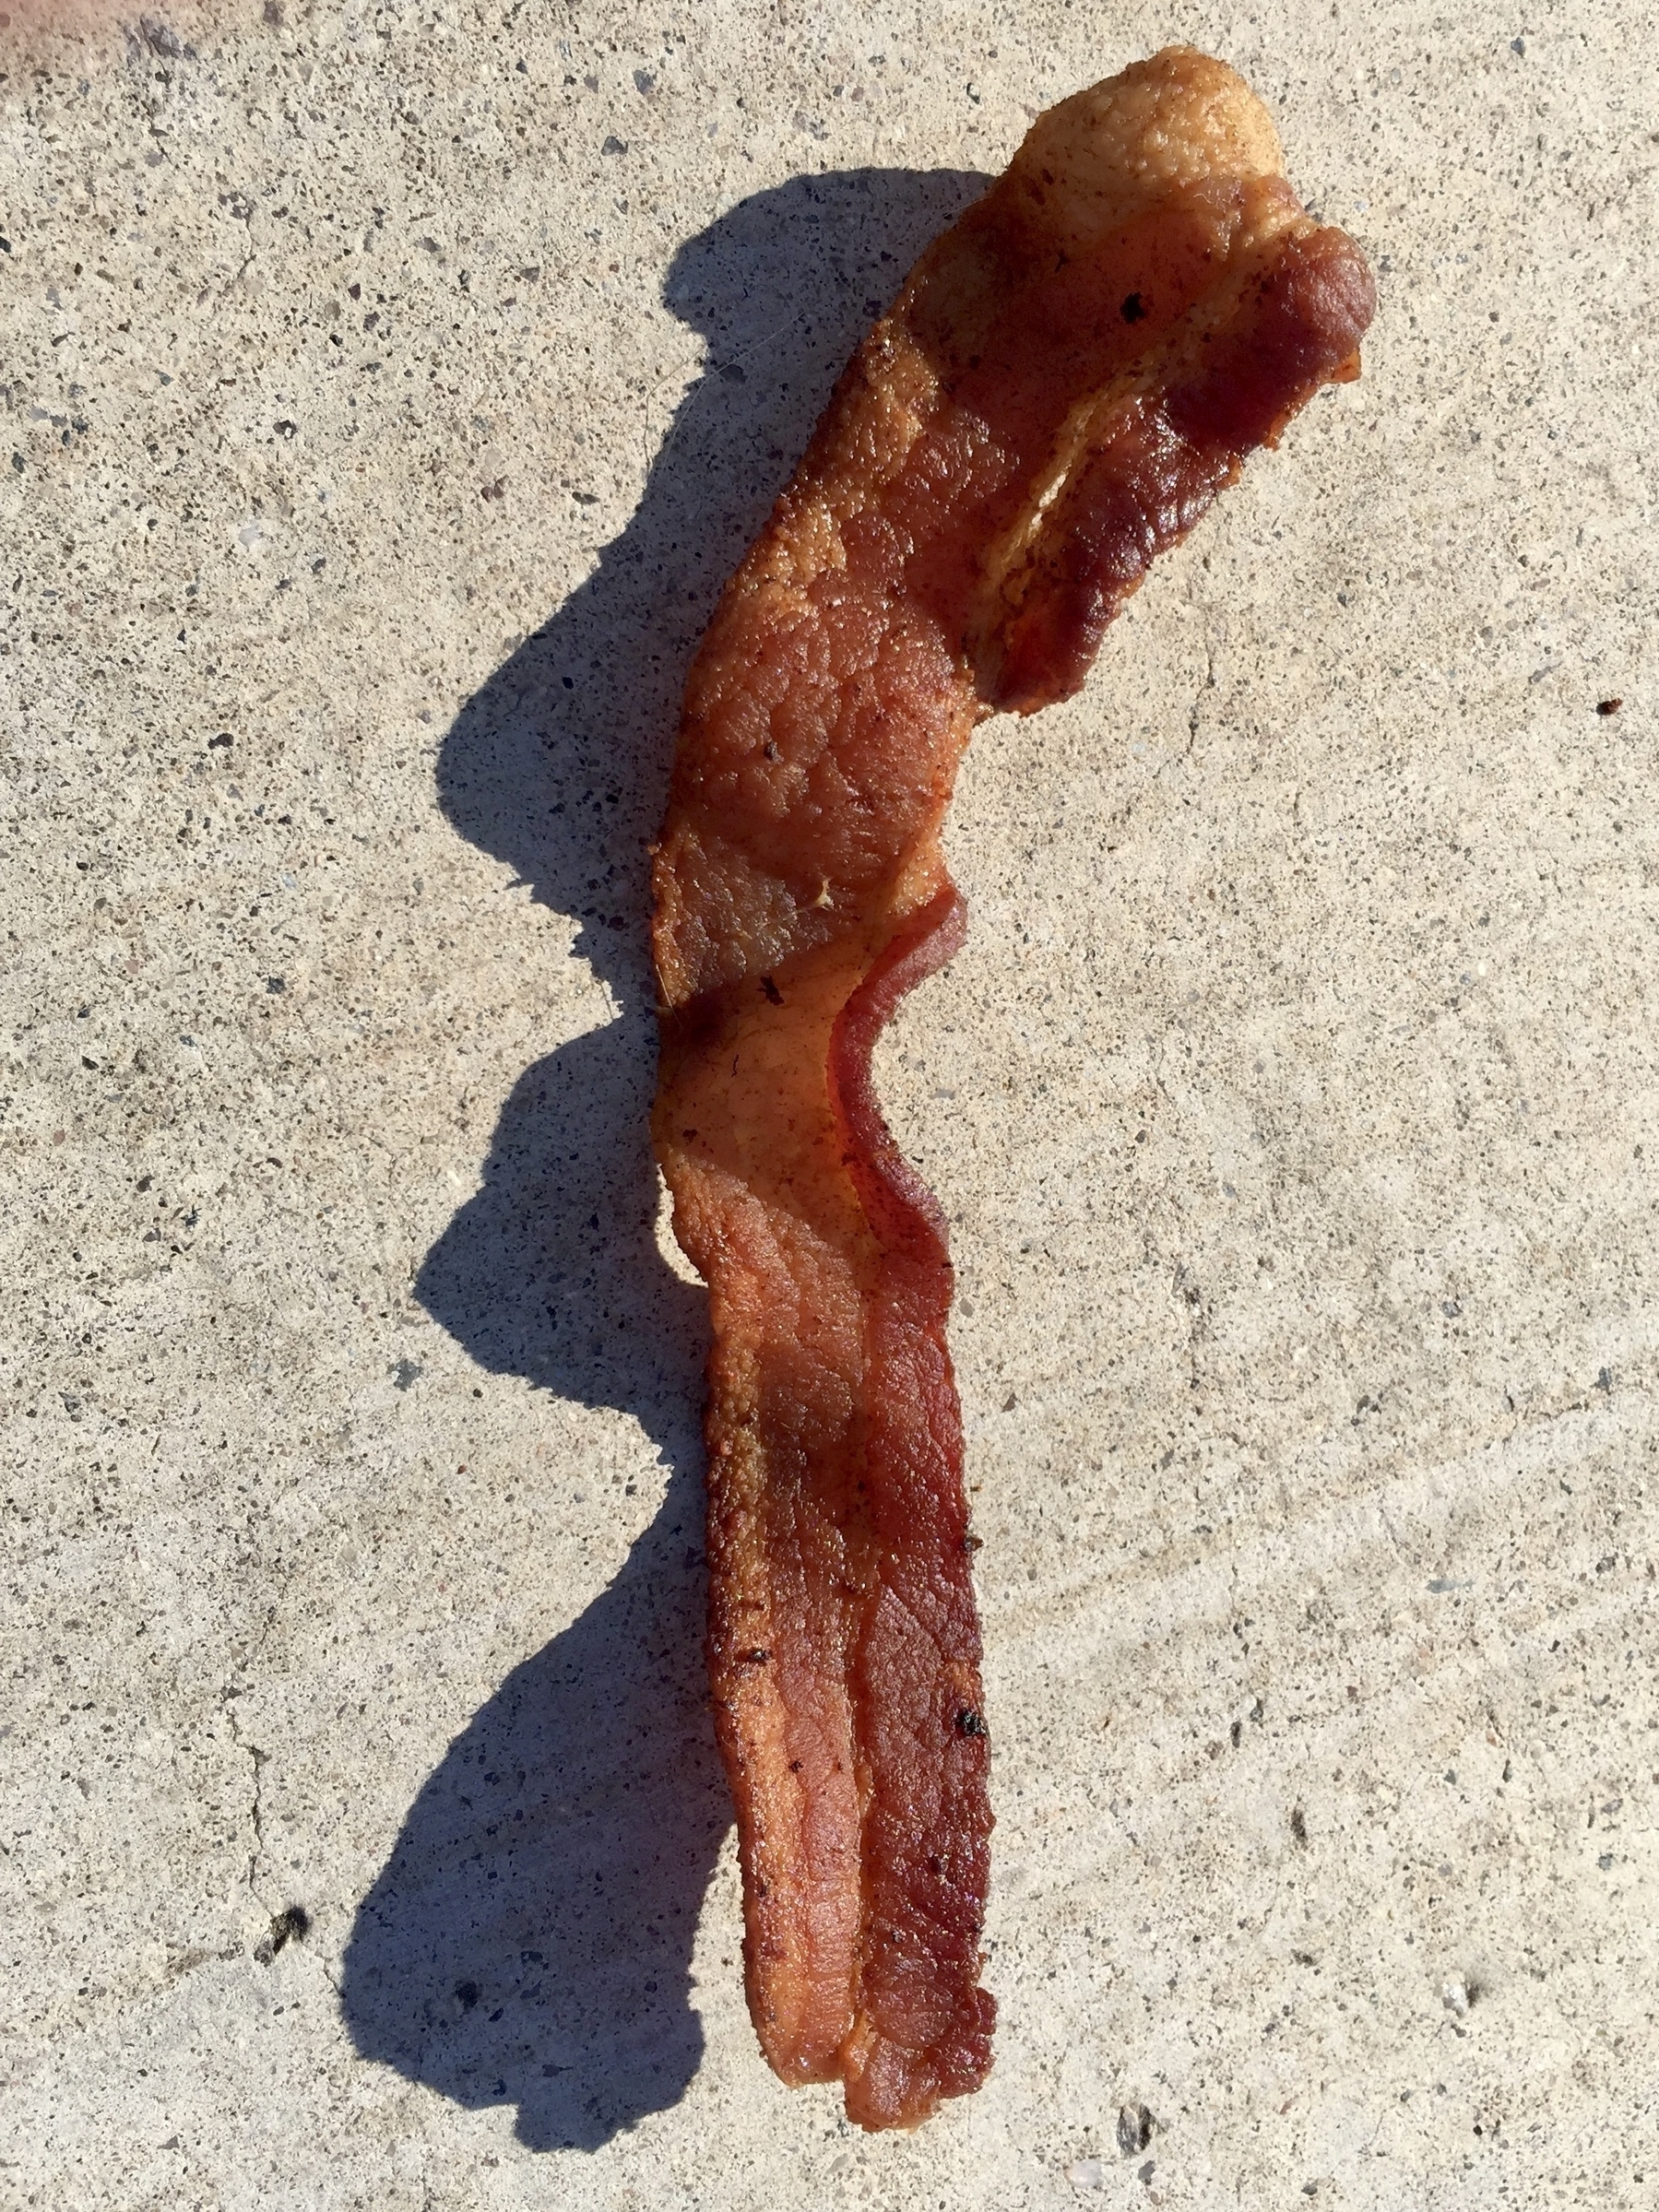 slice of bacon on the sidewalk